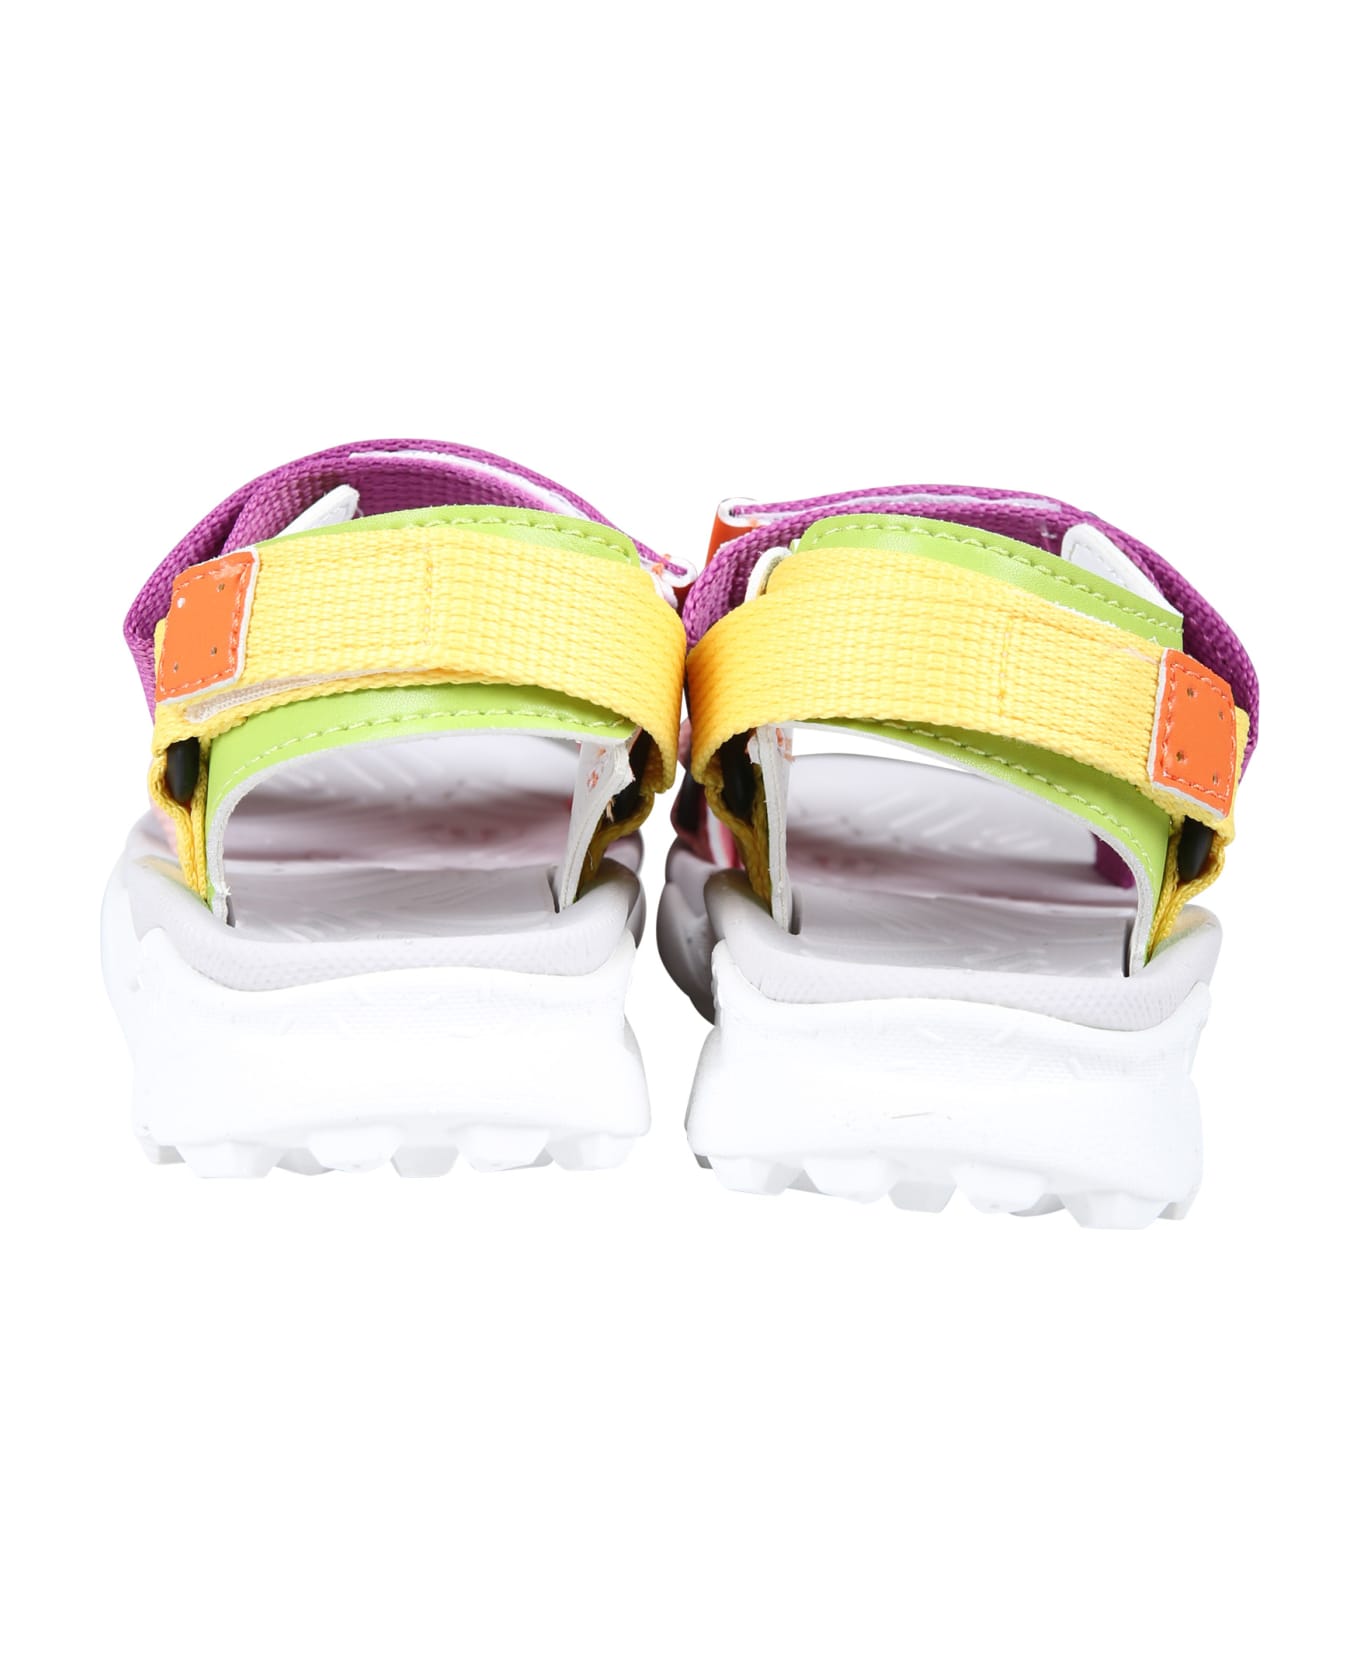 Flower Mountain Multicolor Nazca Sandals For Girl - Multicolor シューズ